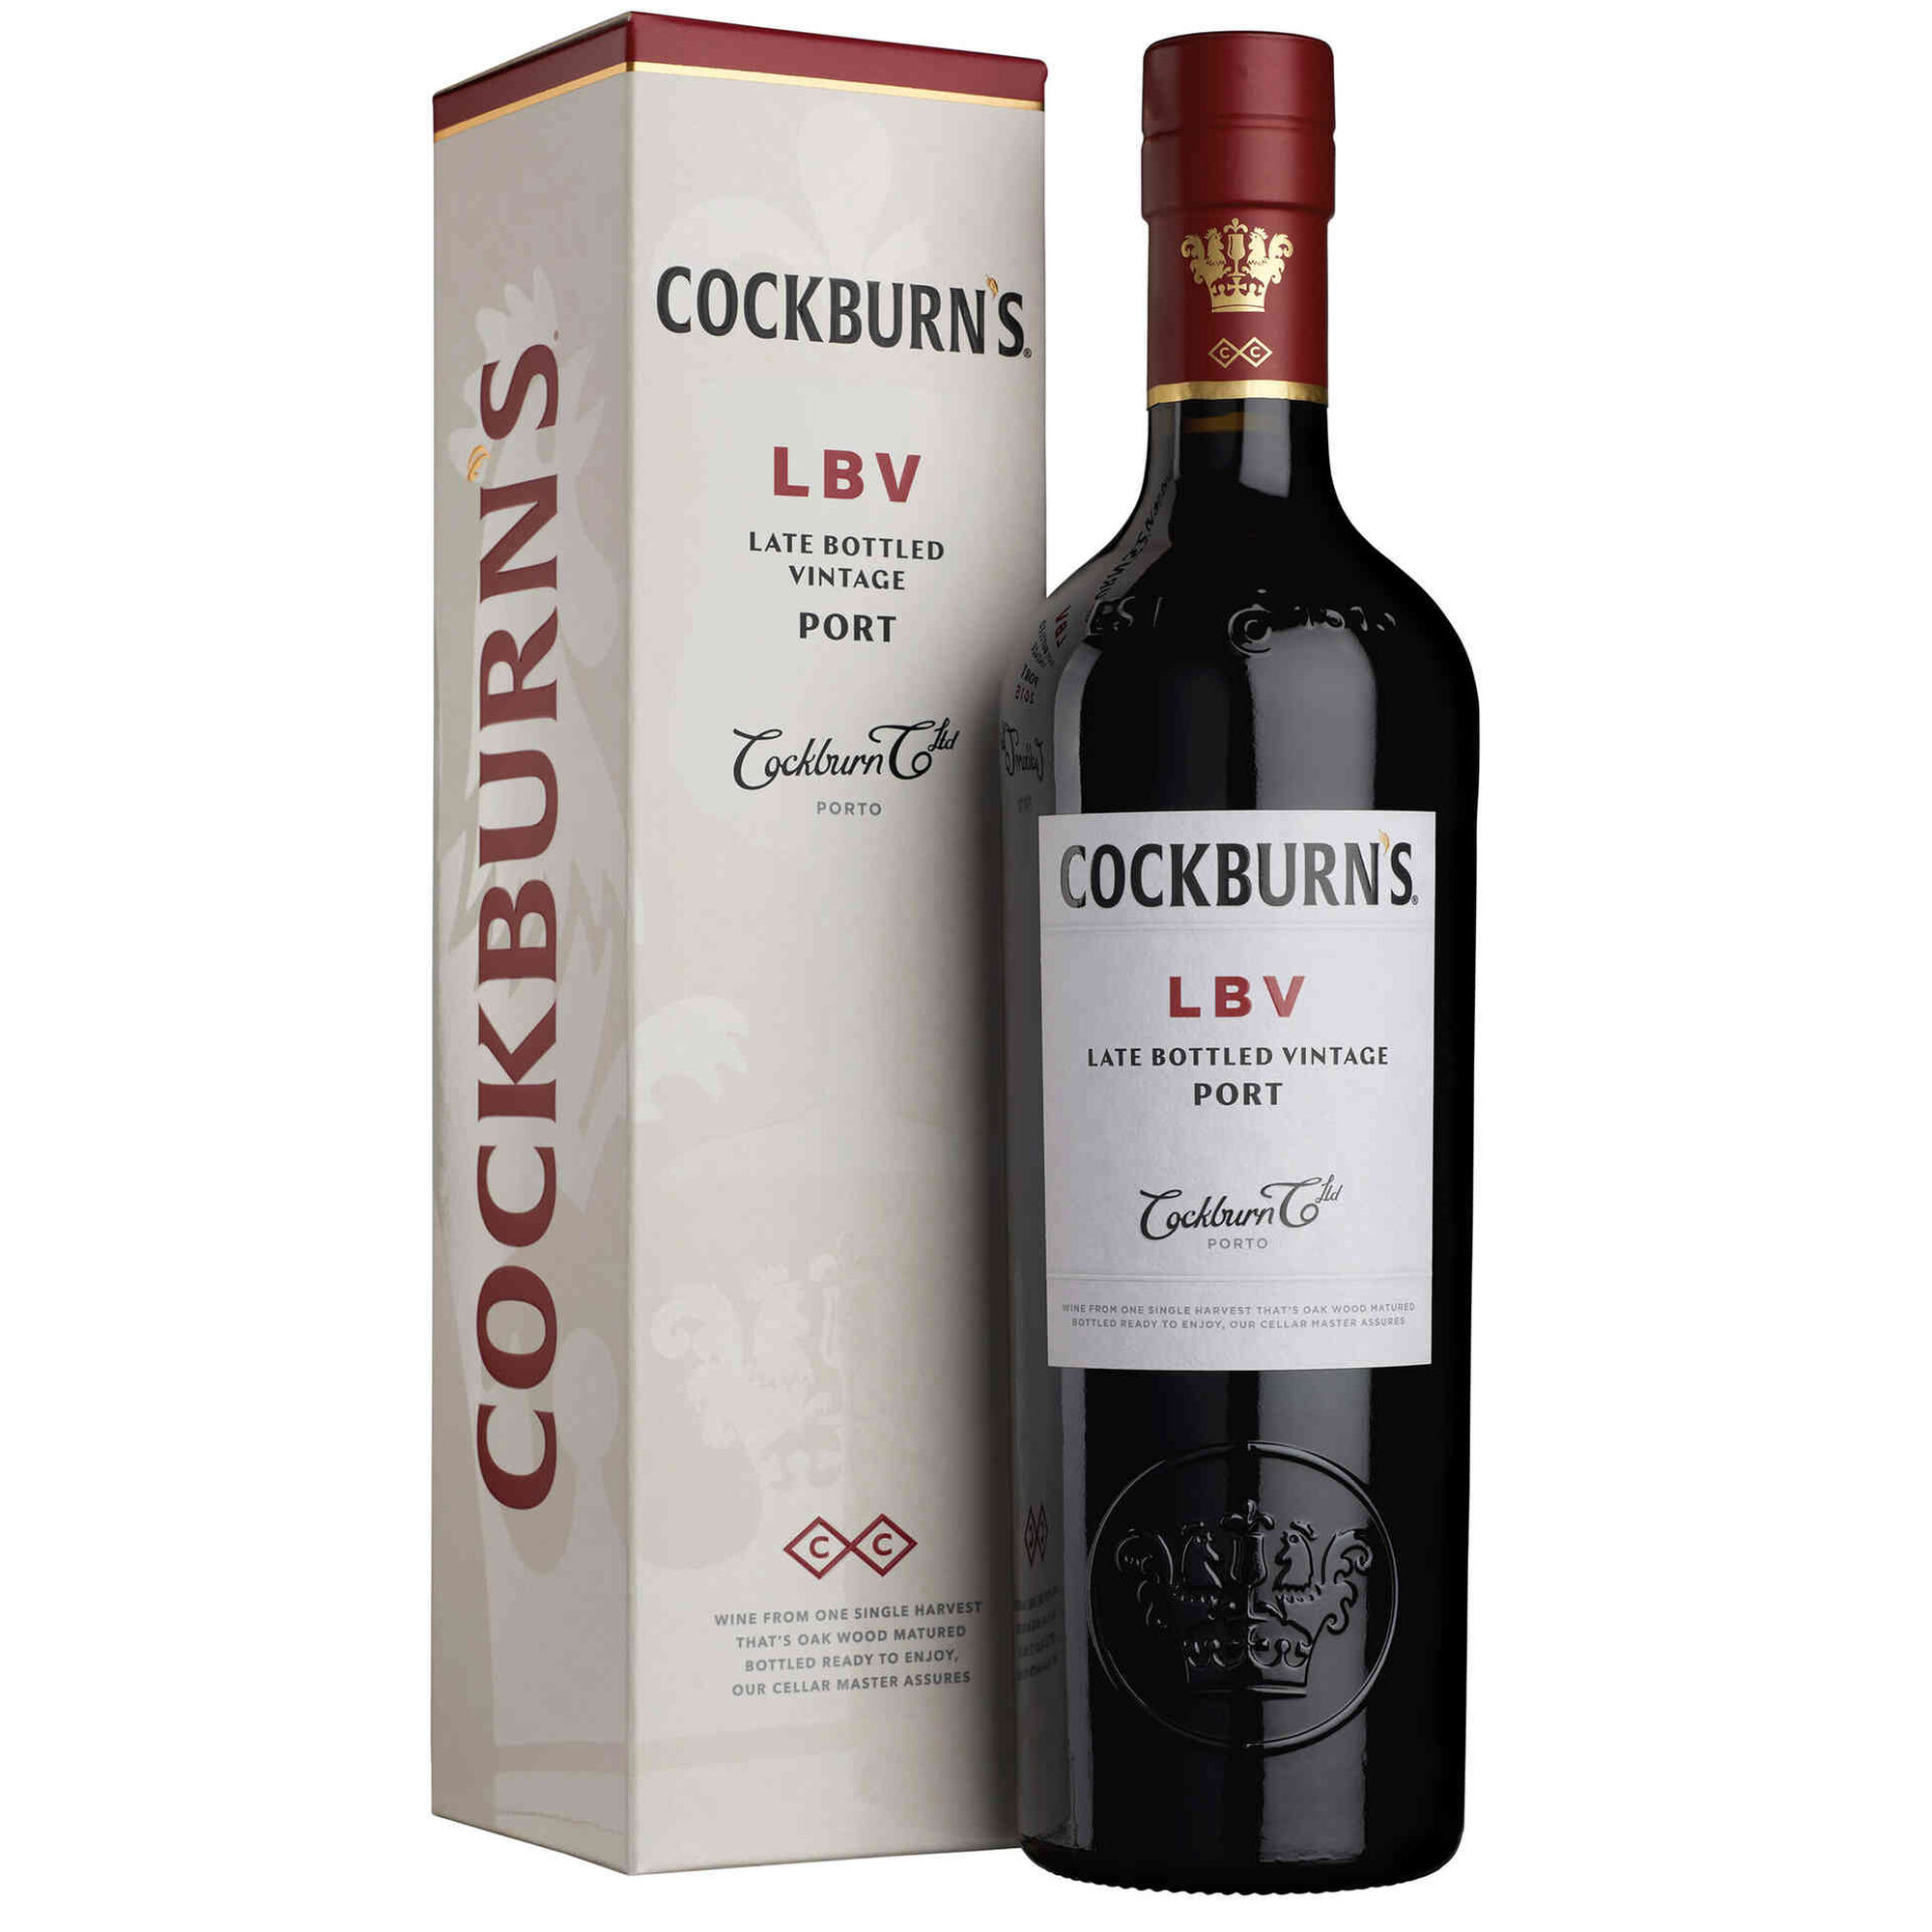 Cockburn's Vinho do Porto Late Bottled Vintage